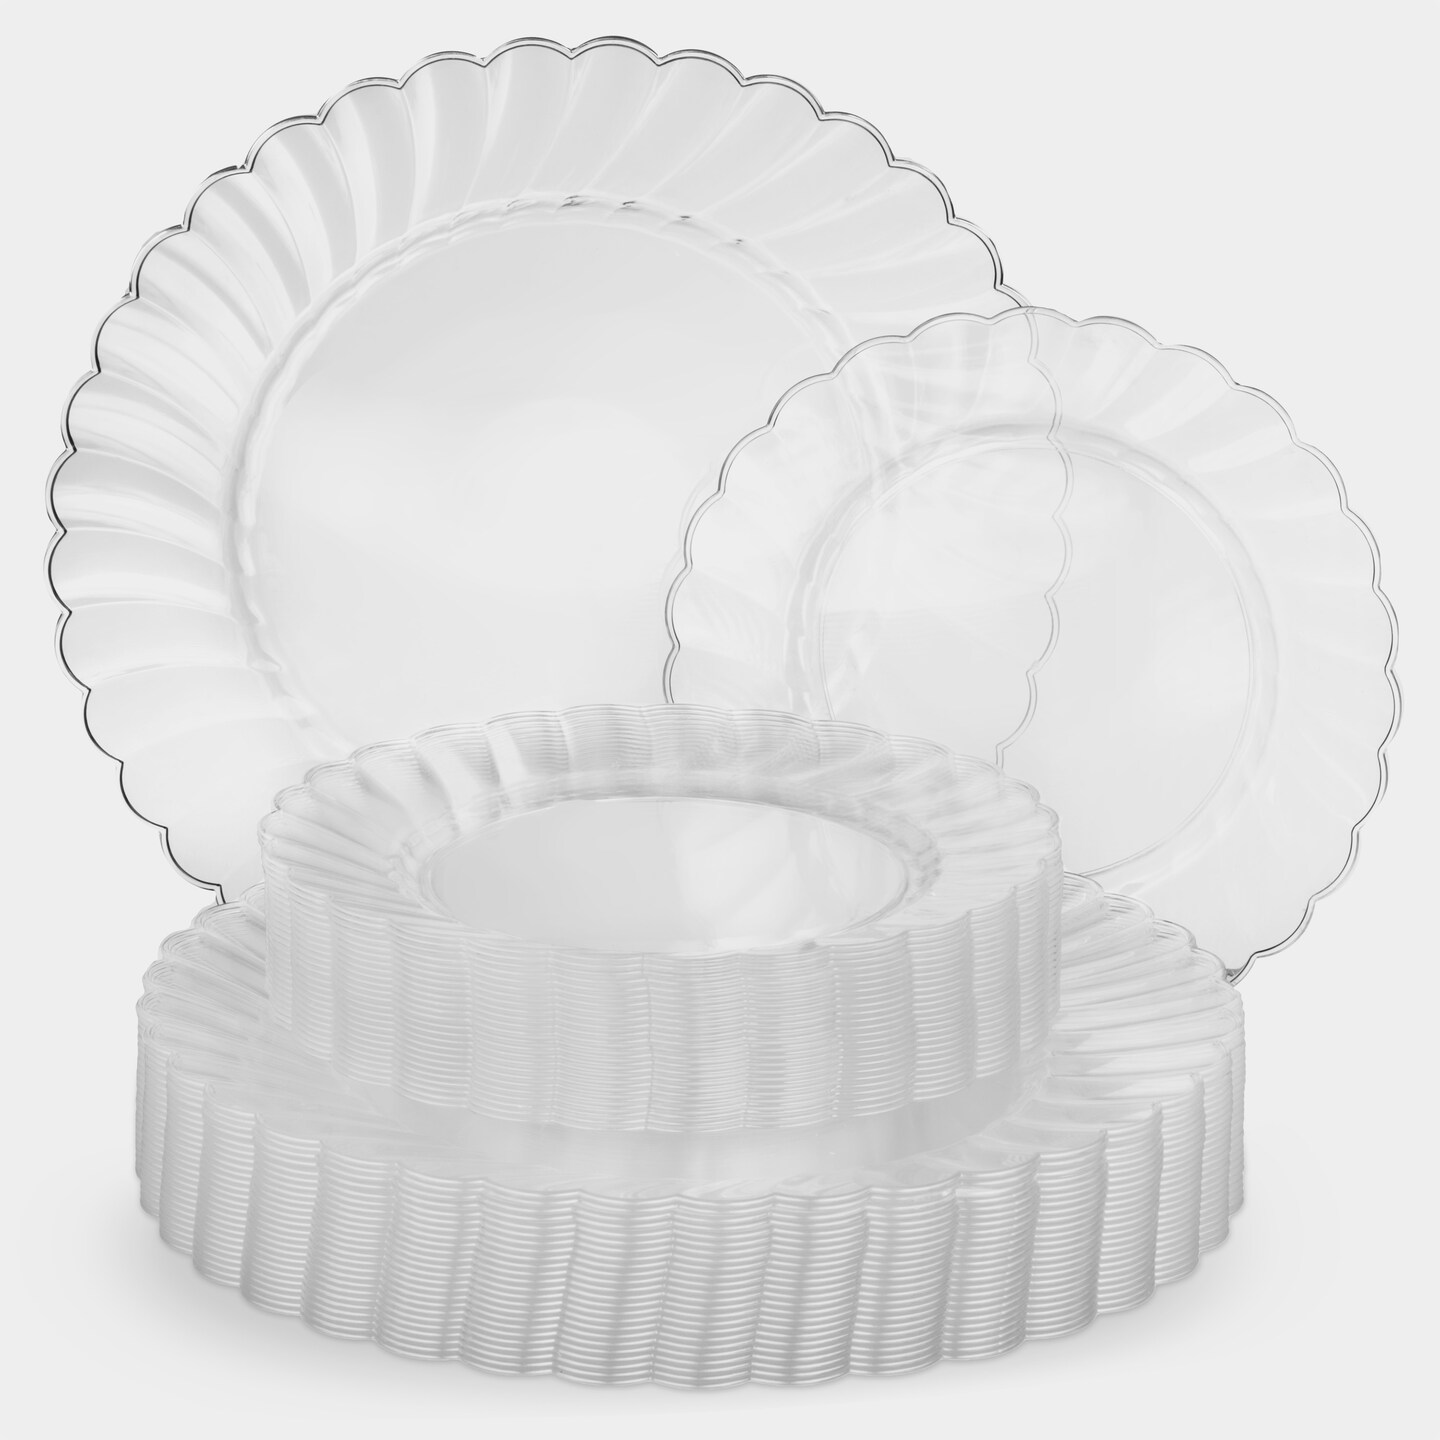 50 Piece (25 Sets) Premium Clear Plastic Plates Dinner, Salad